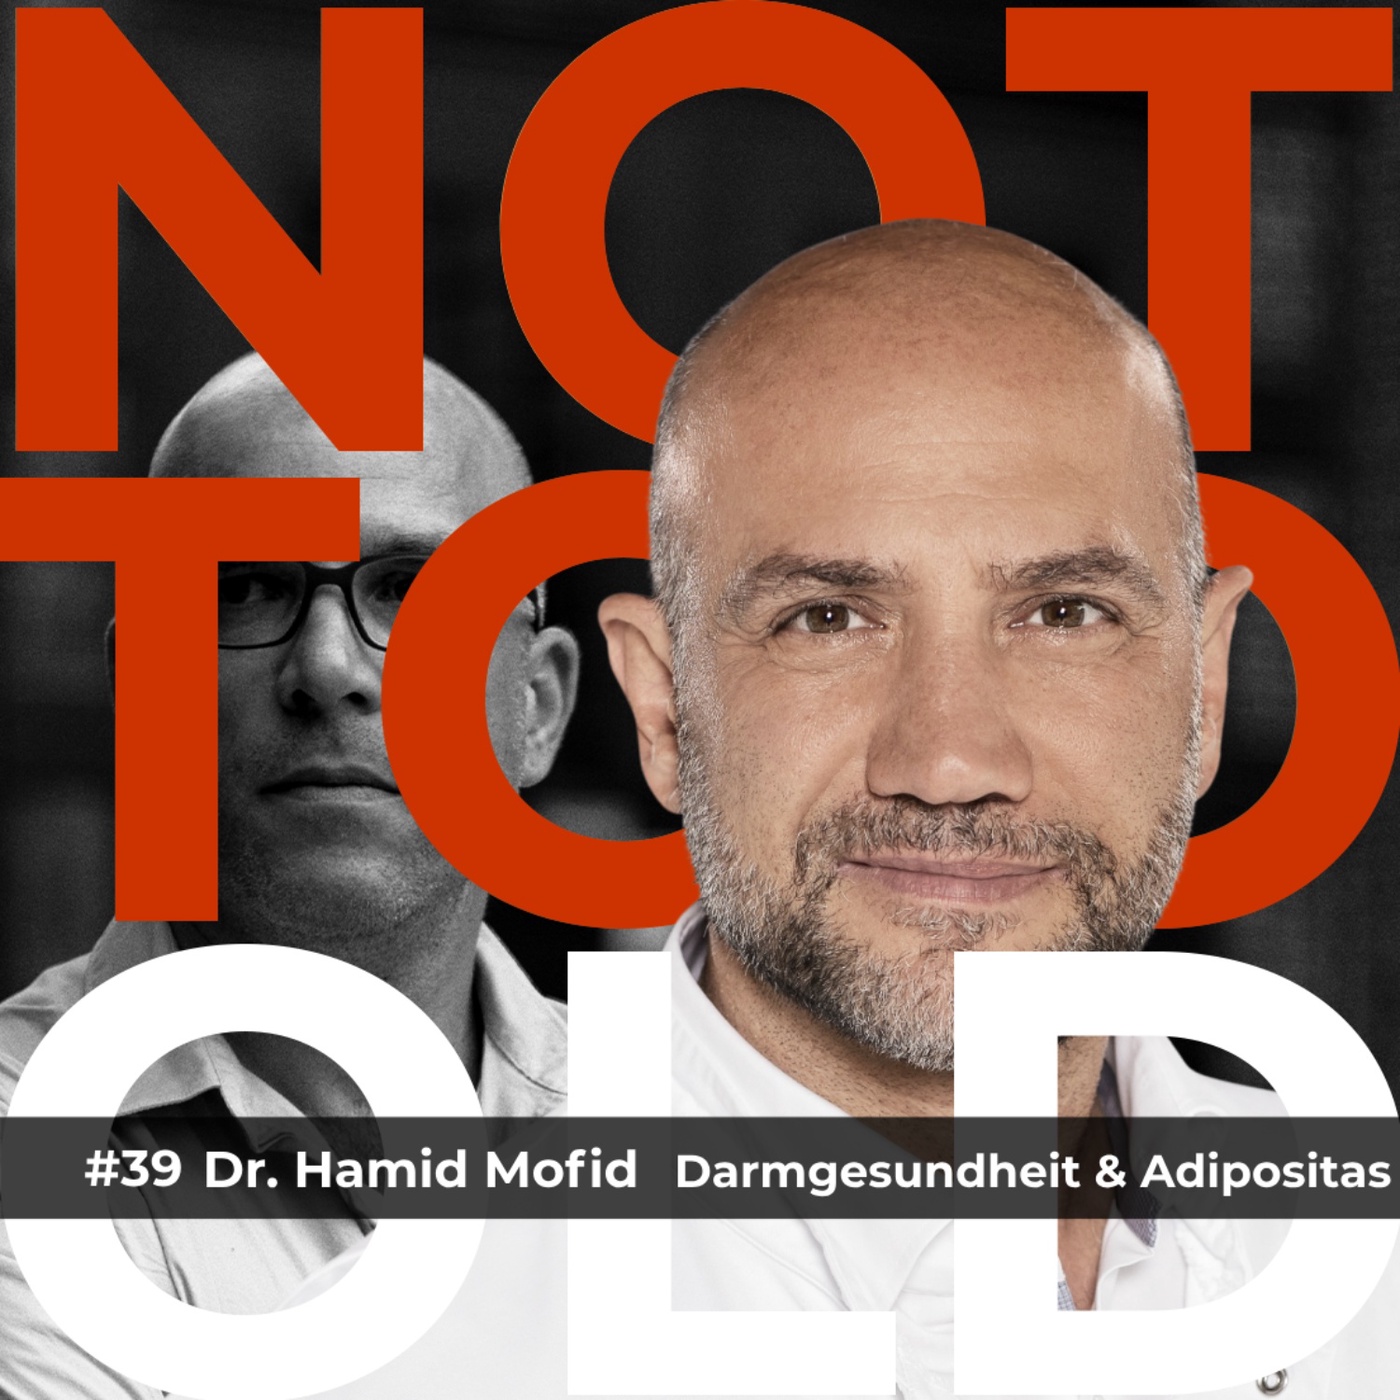 #39 Darmgesundheit & Adipositas - Dr. Hamid Mofid